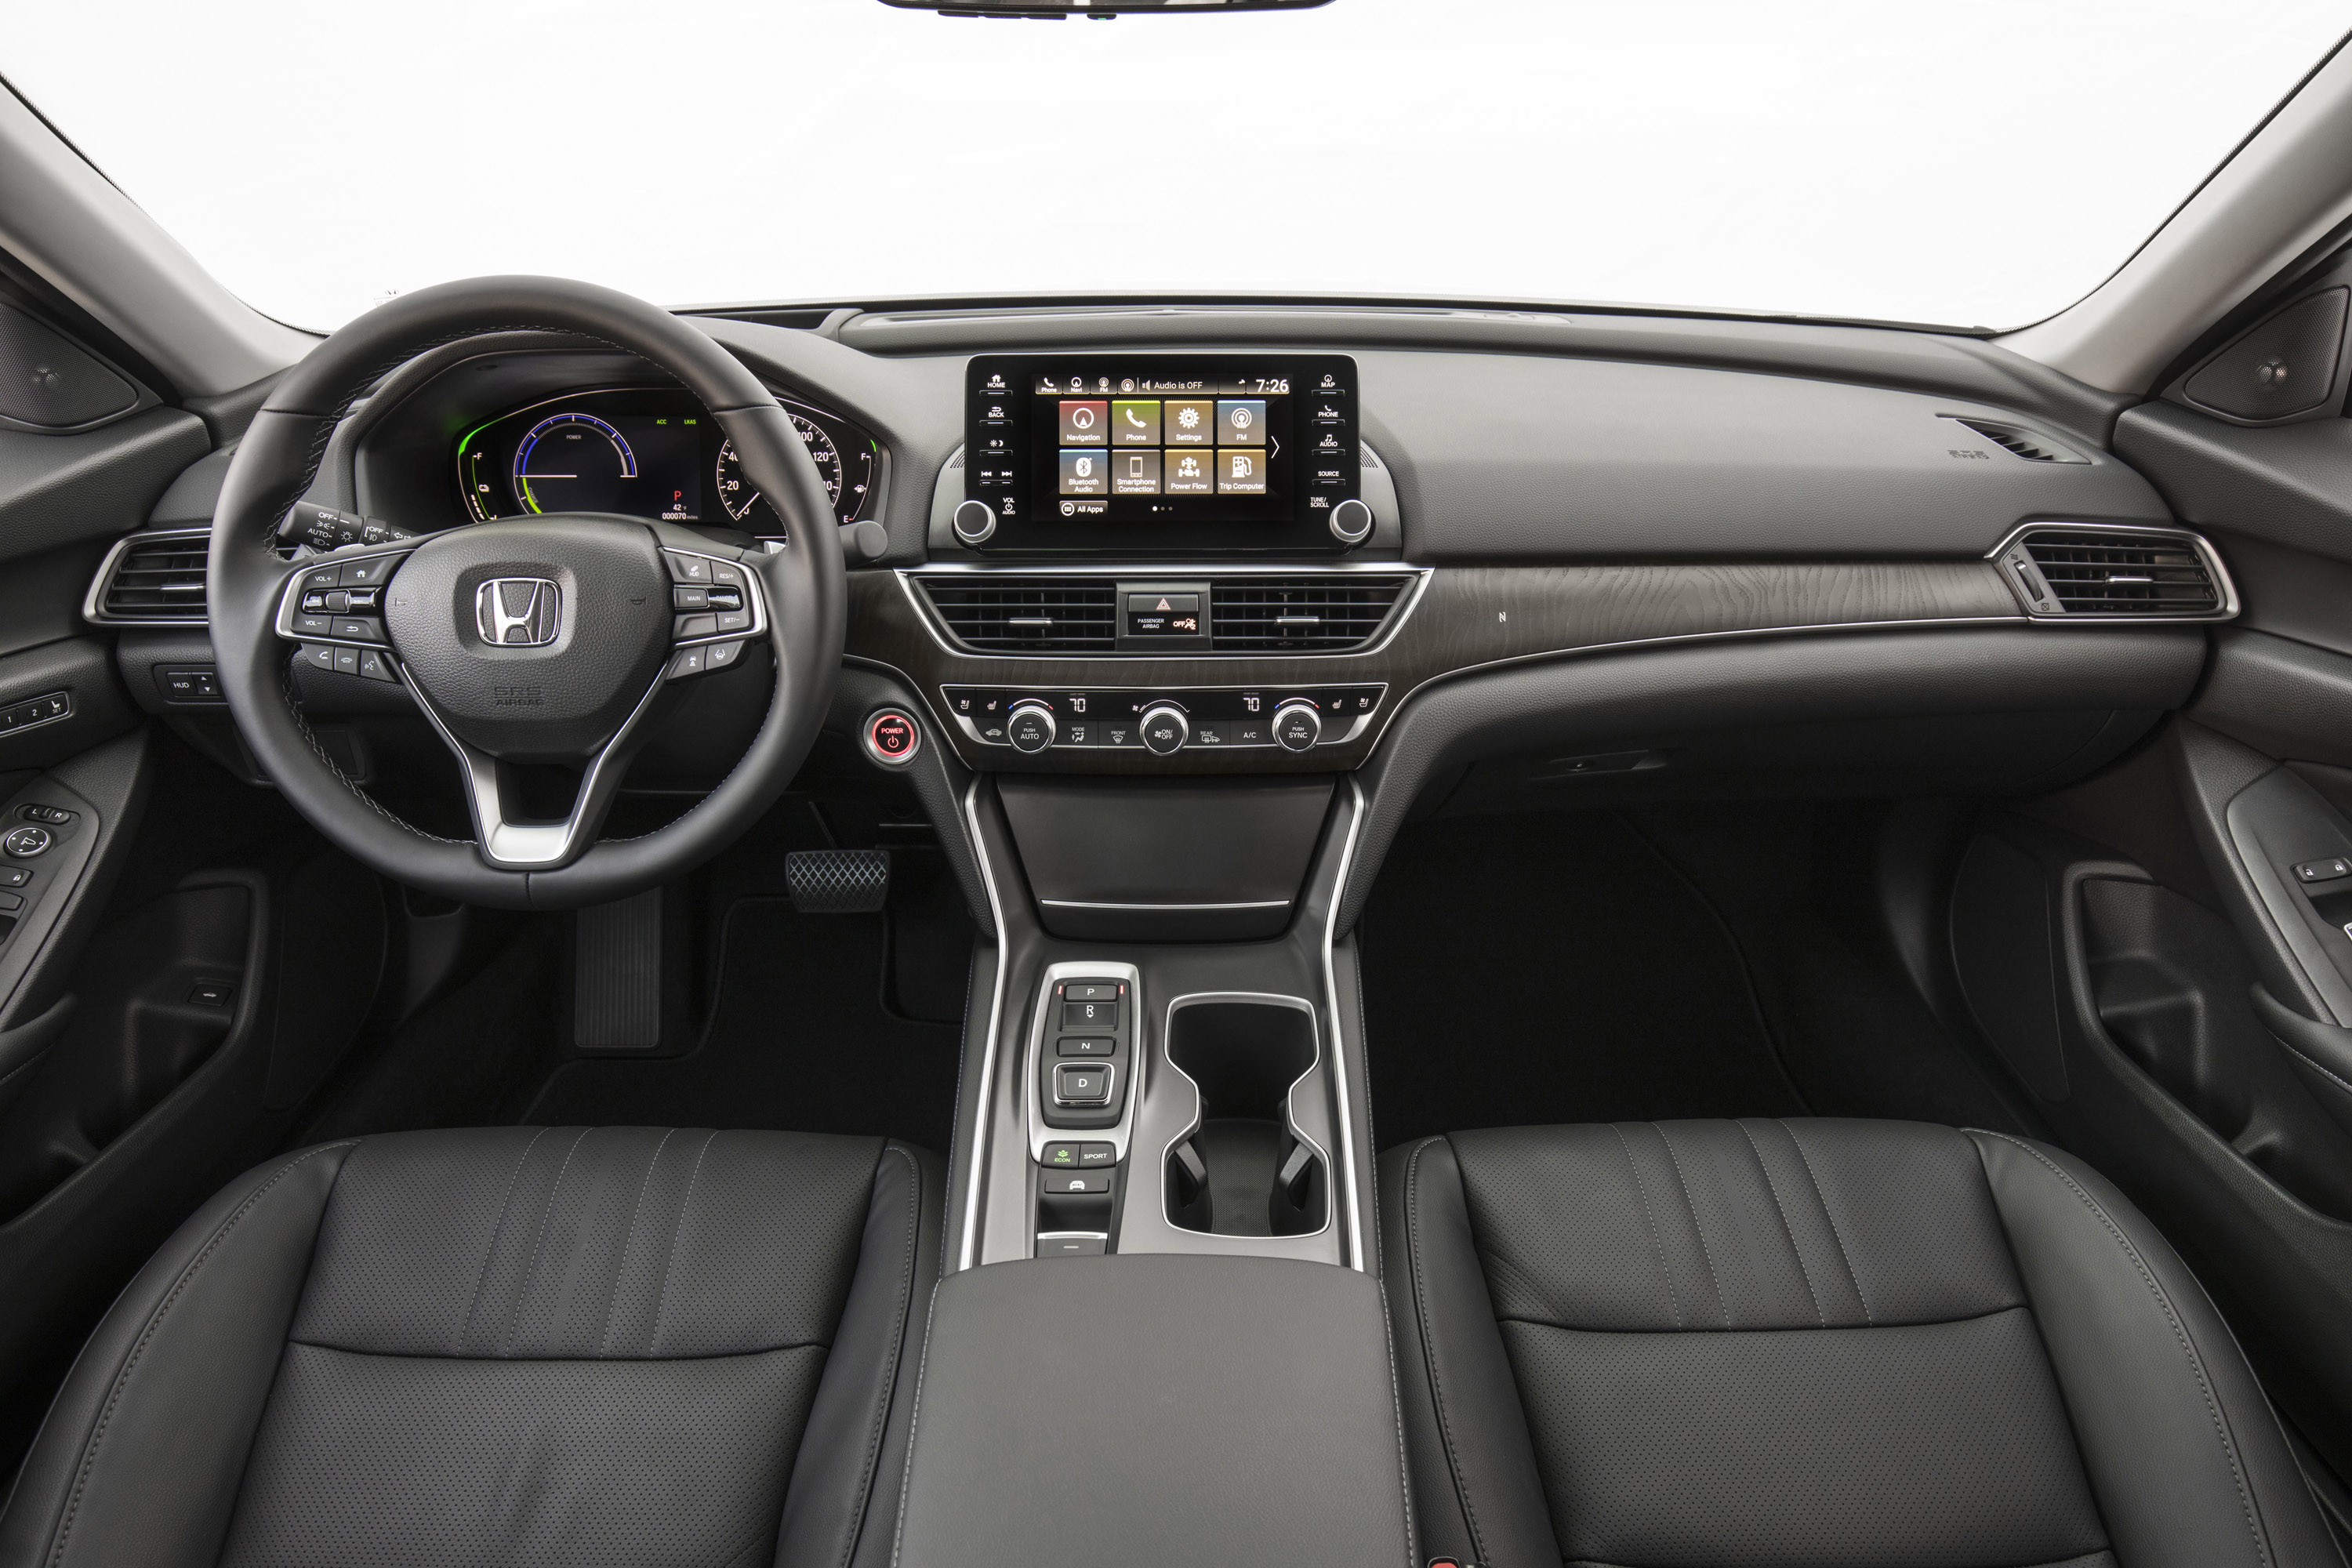 Honda Accord Hybrid exterior 2018